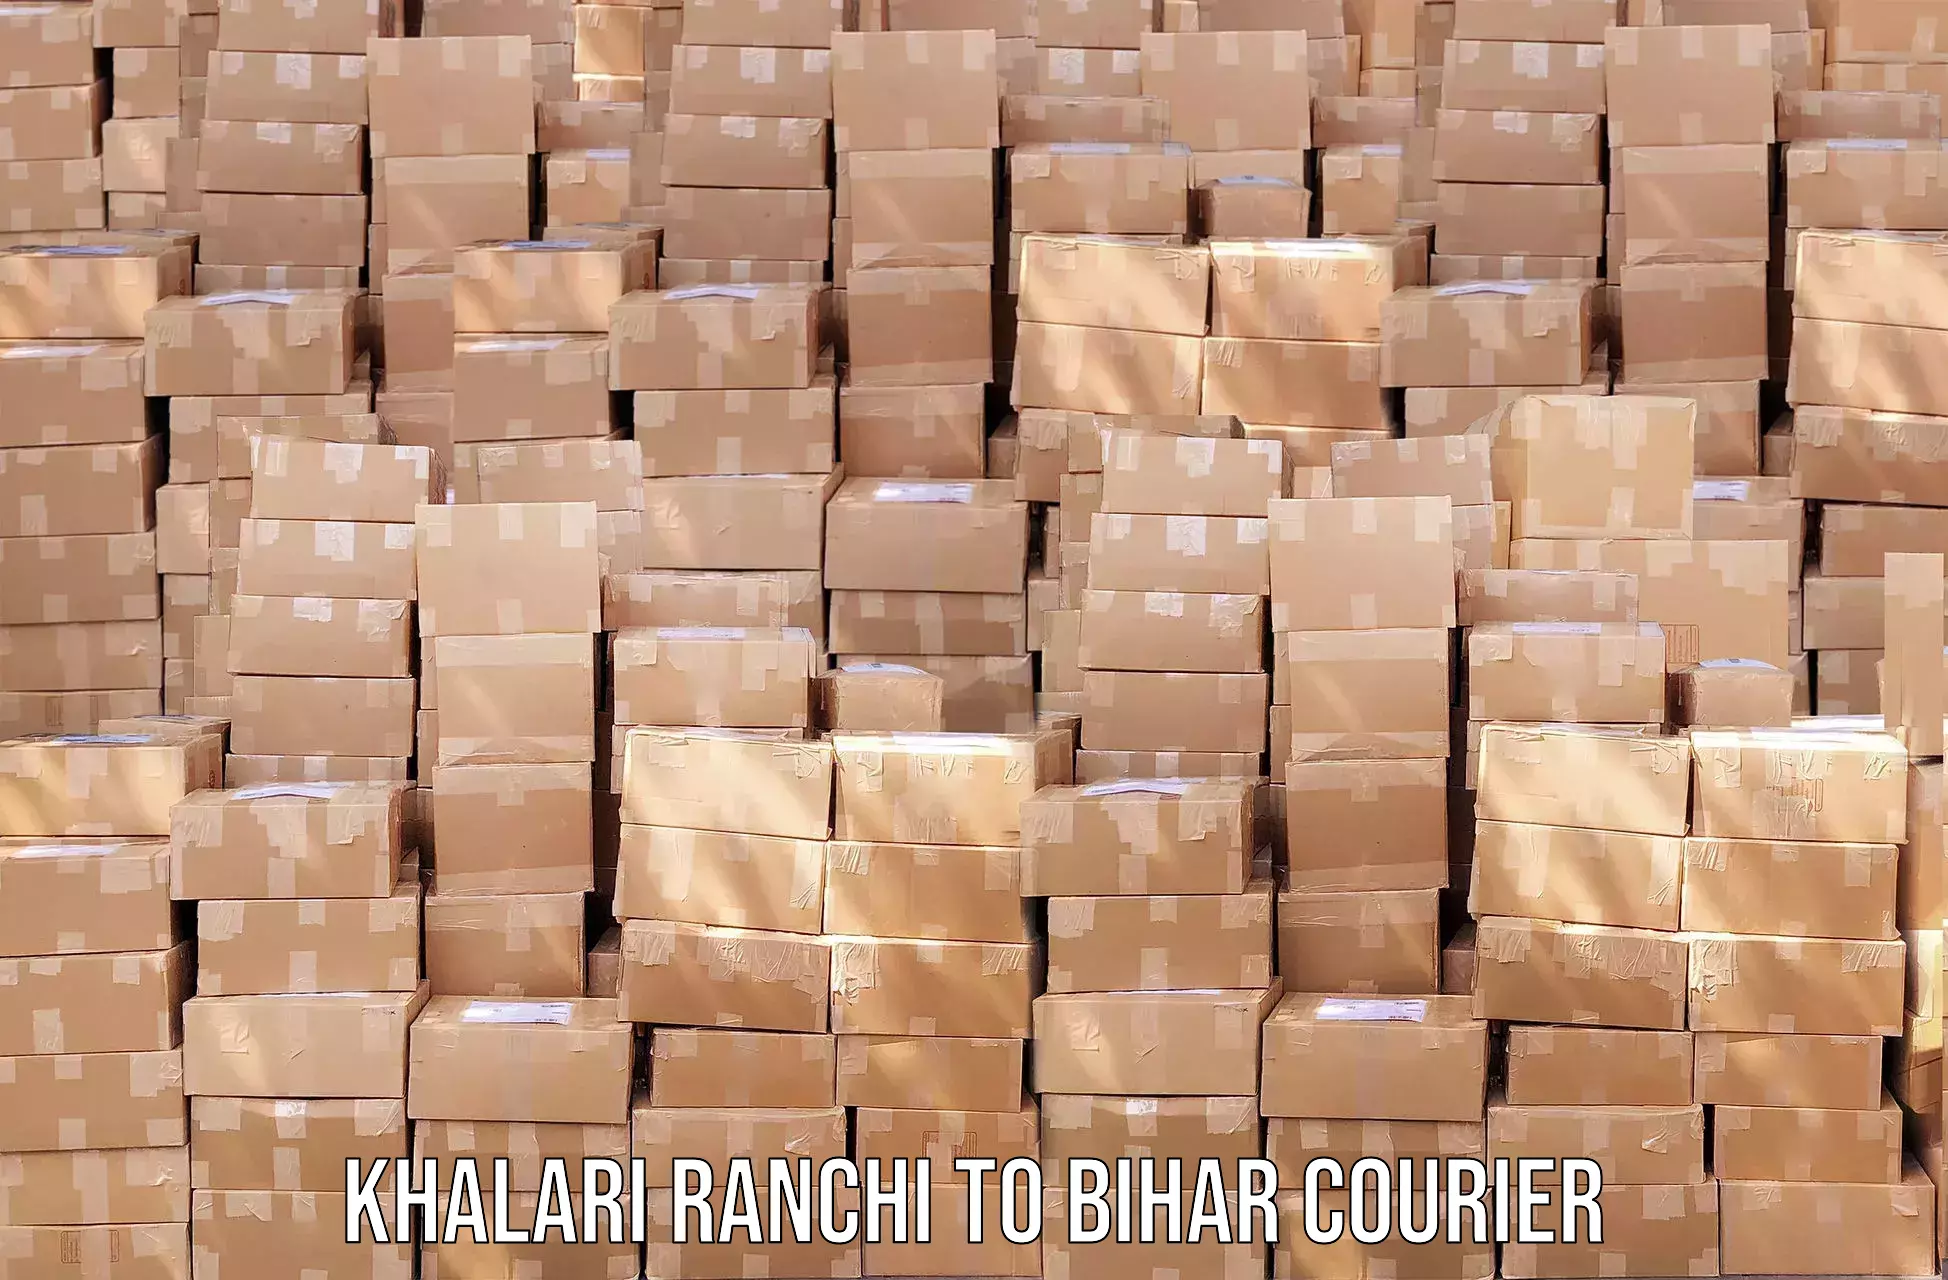 Courier service partnerships Khalari Ranchi to Bihar